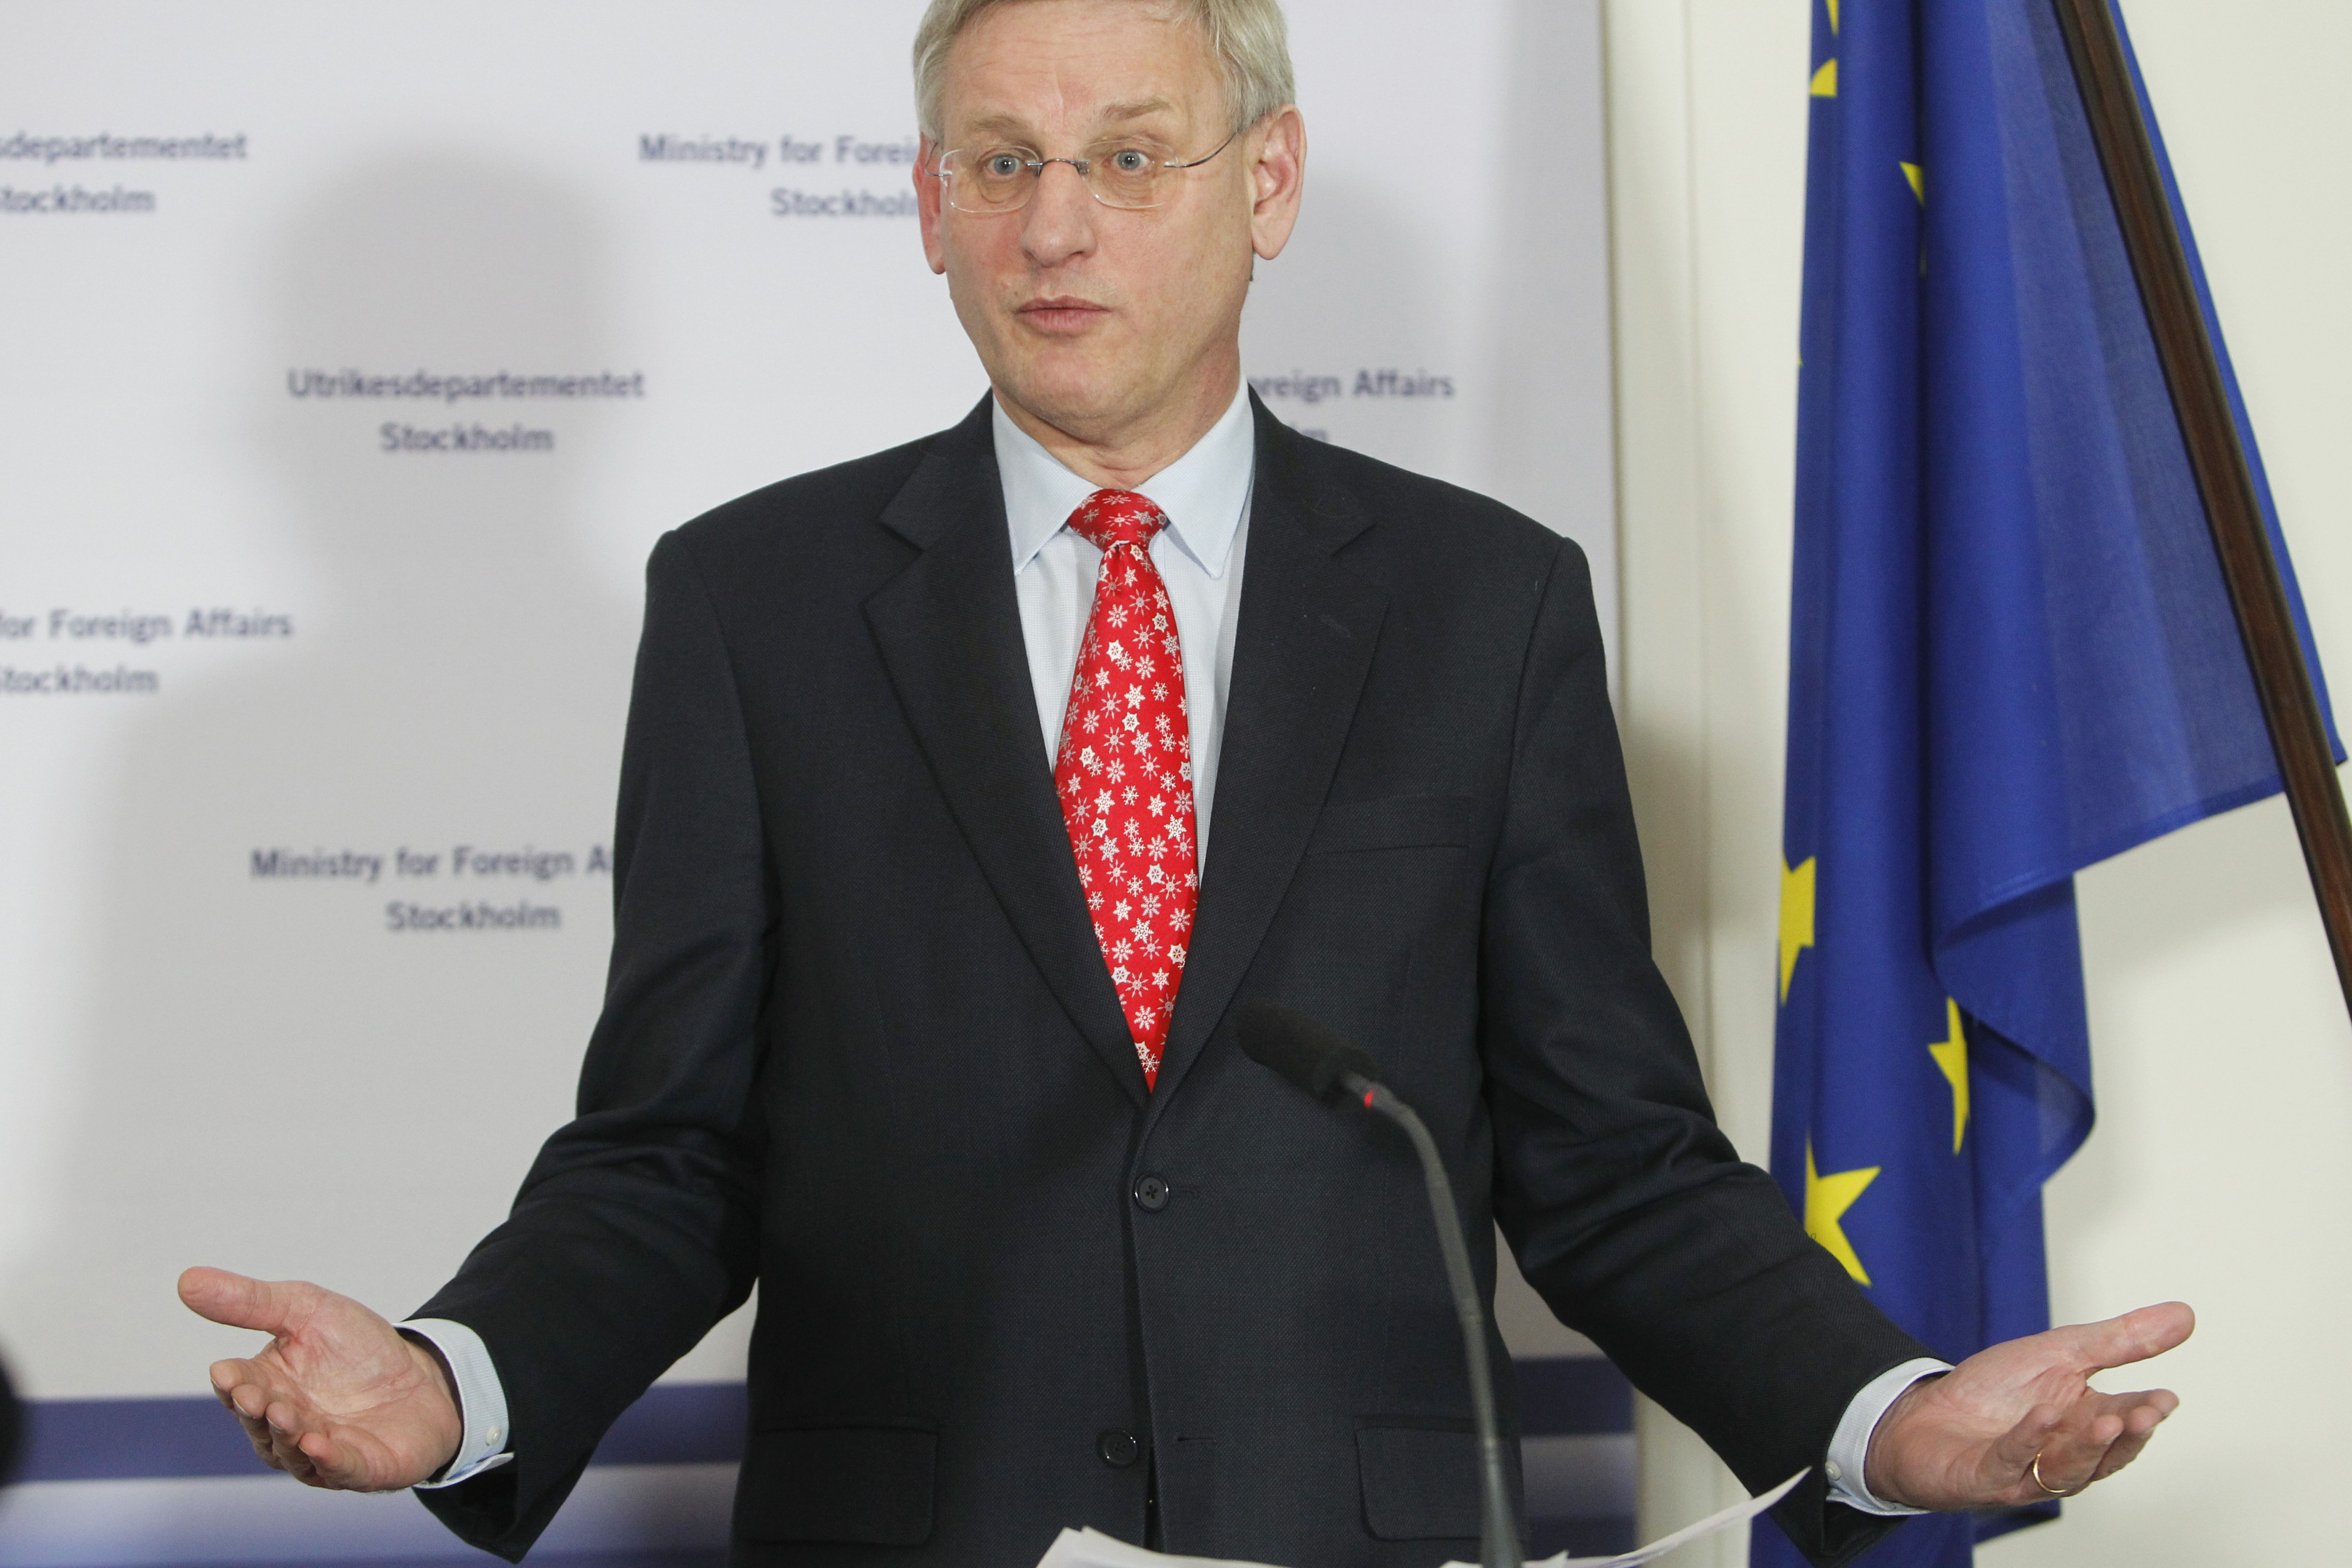 Frihet, Carl Bildt, Wikileaks, Davos, Internet